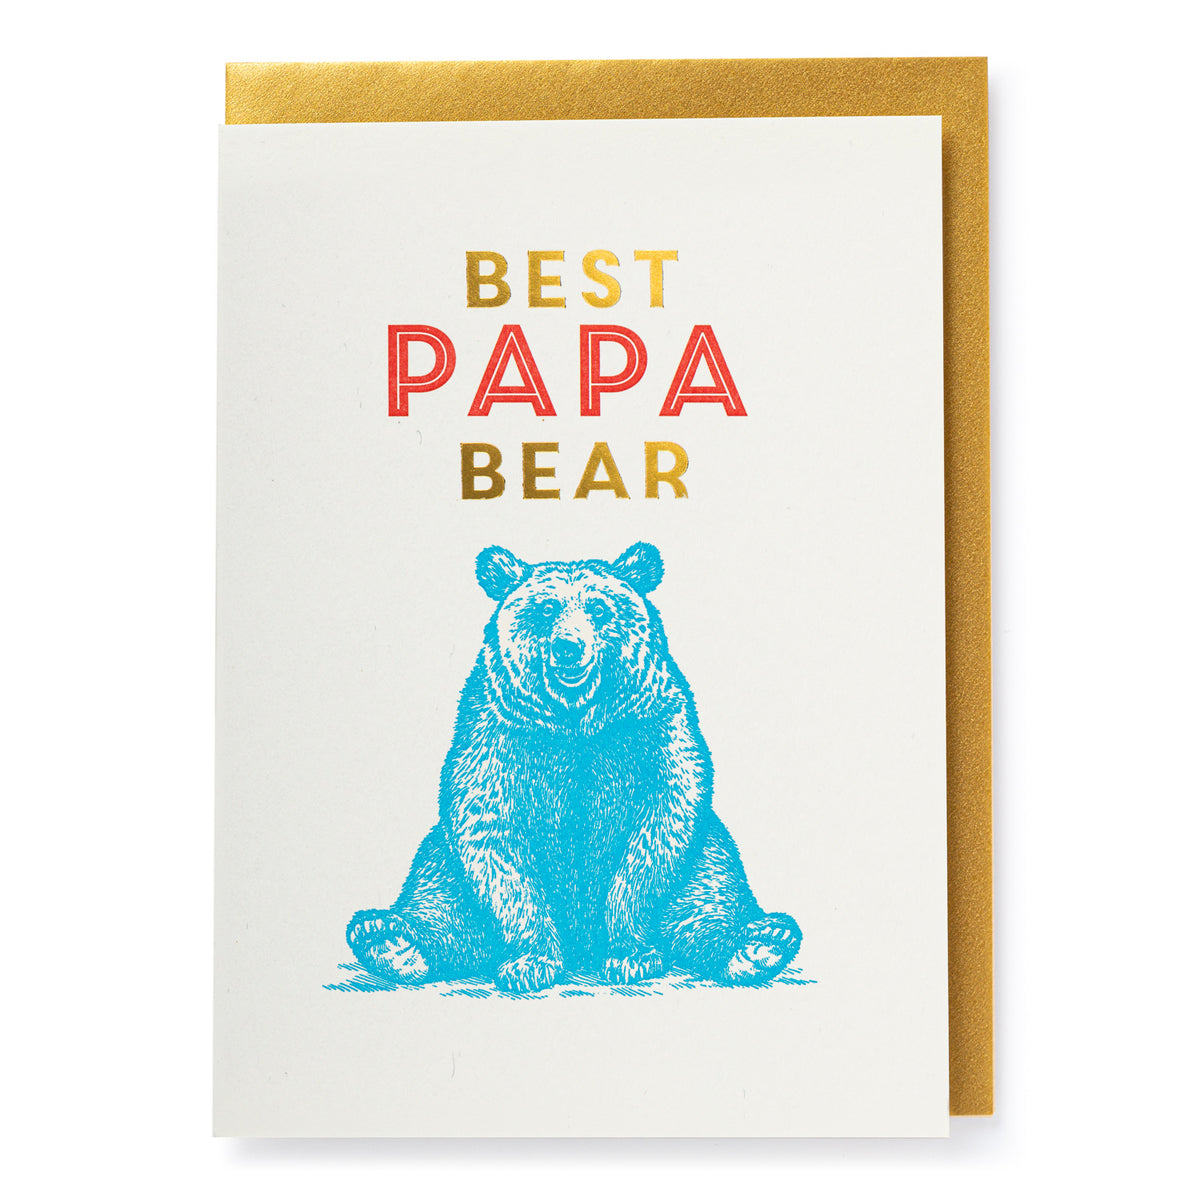 Best Papa Bear - letterpress printed greeting card